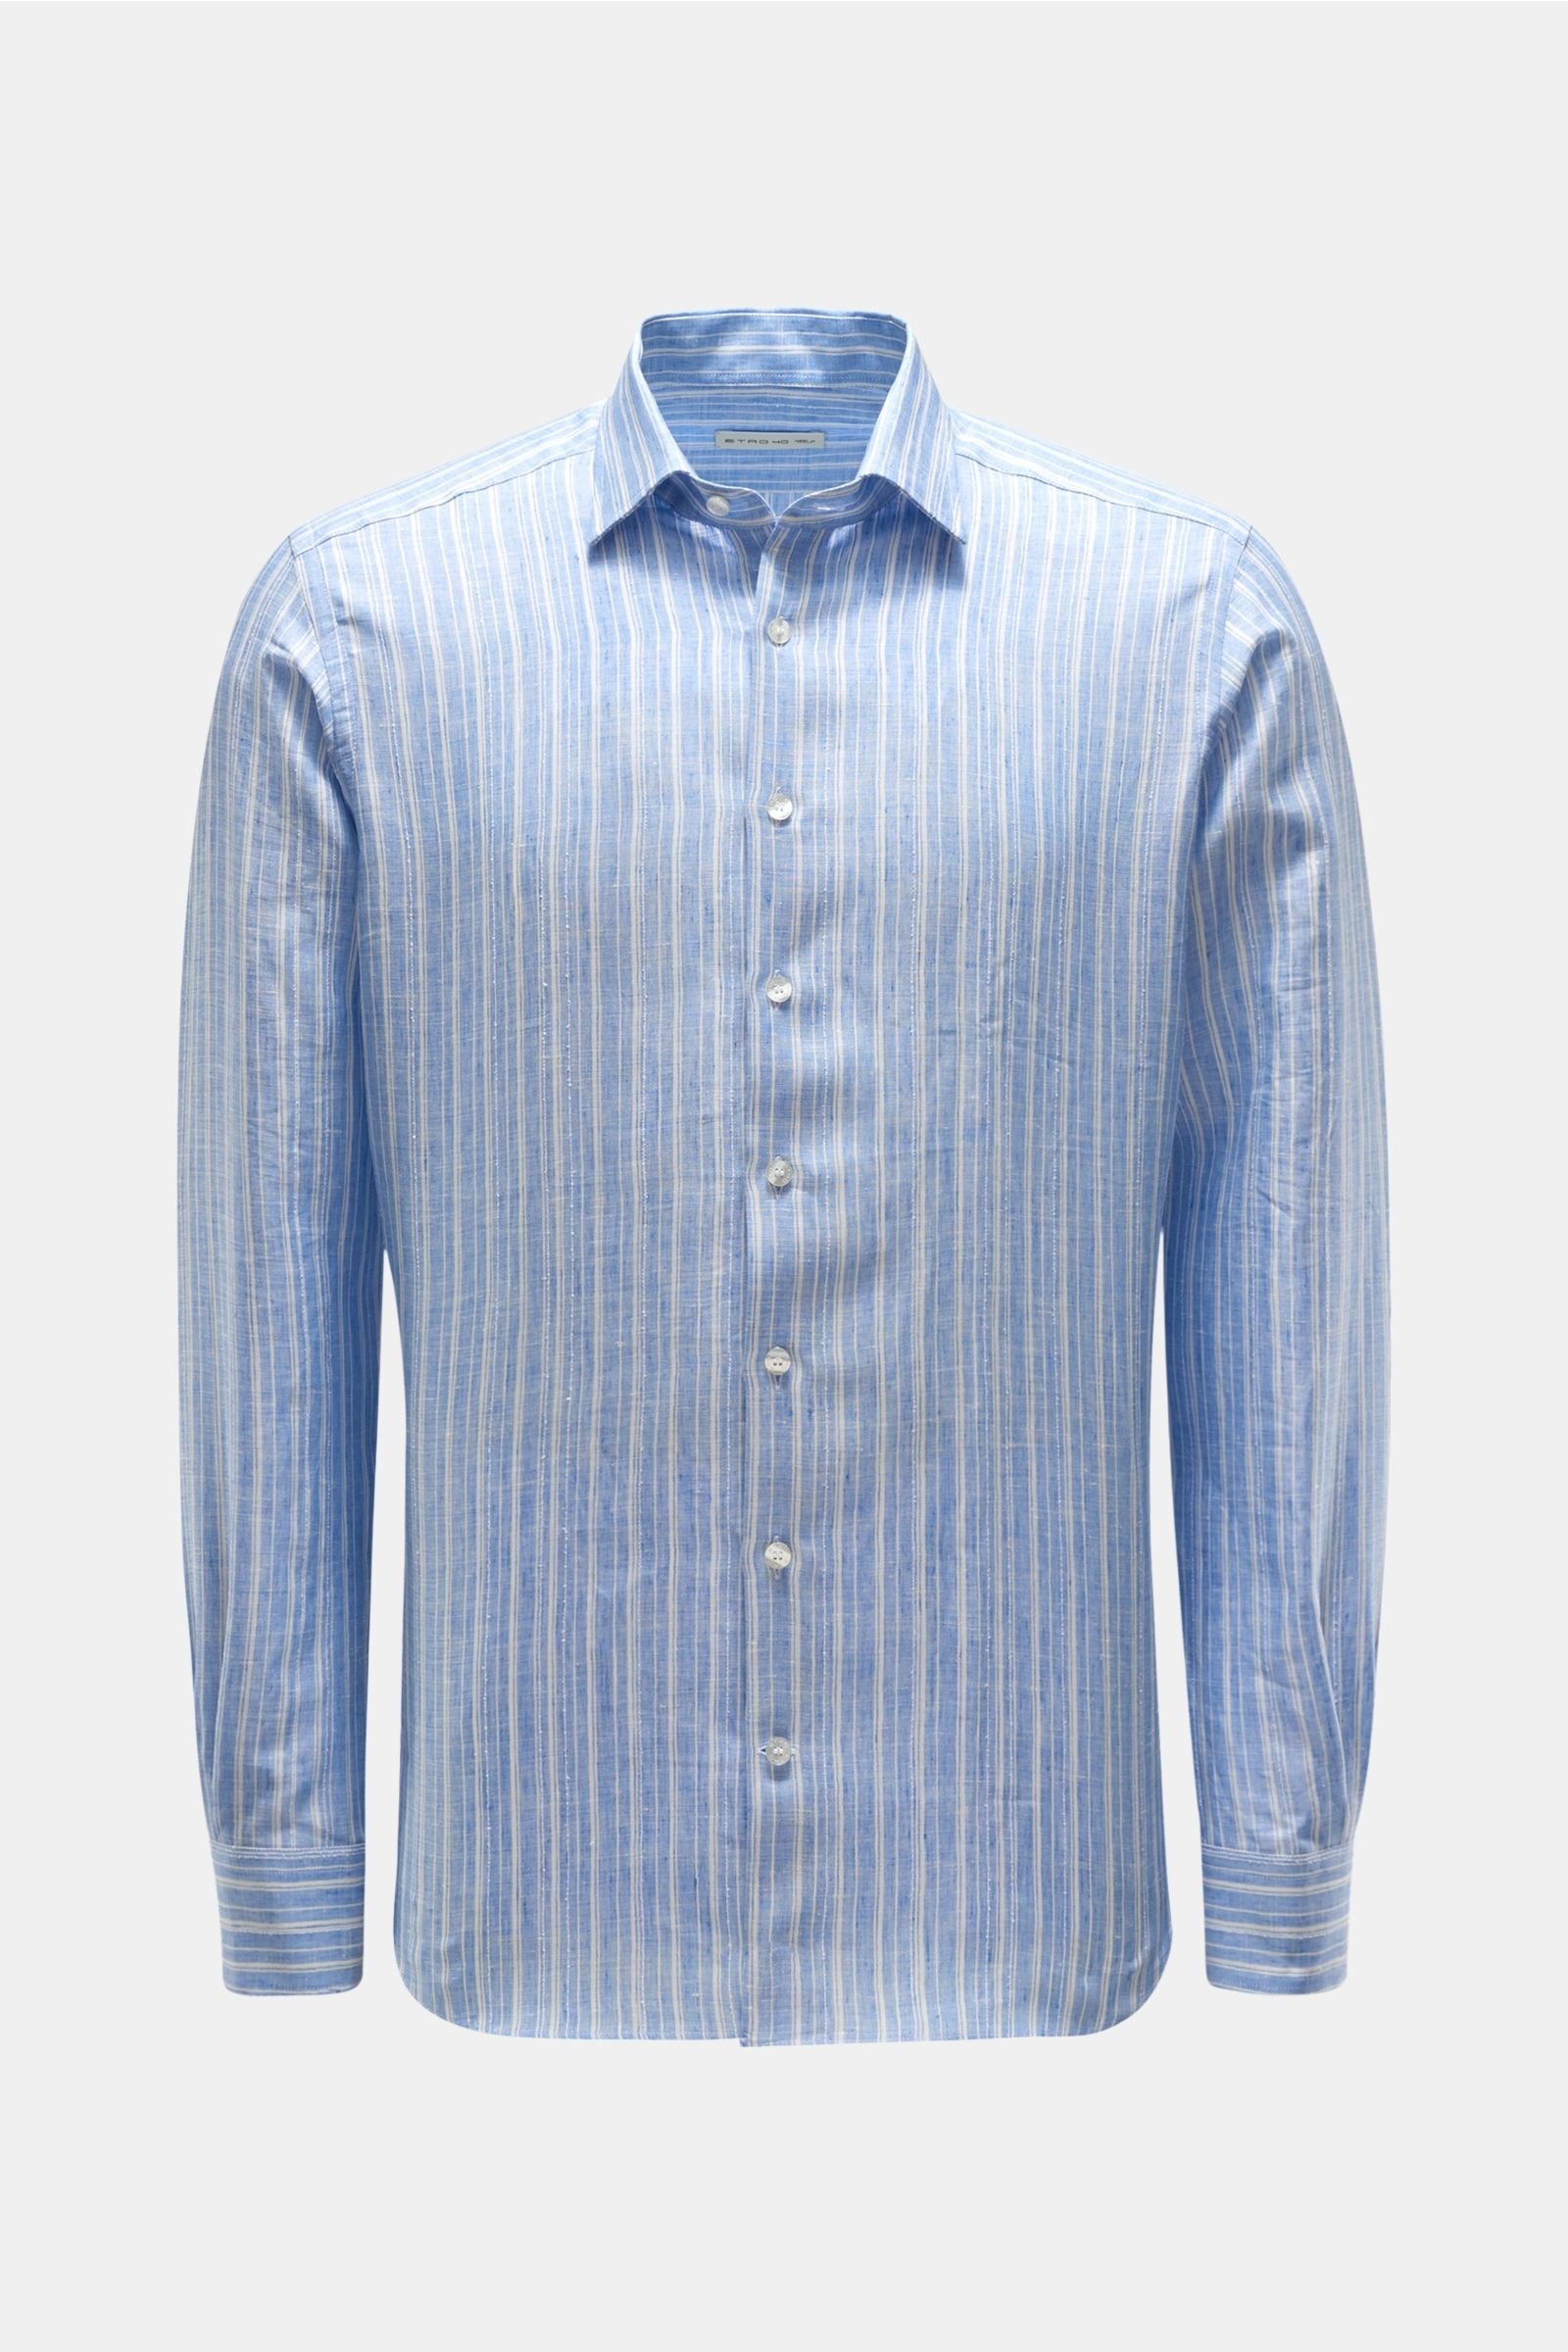 Casual shirt slim collar light blue striped